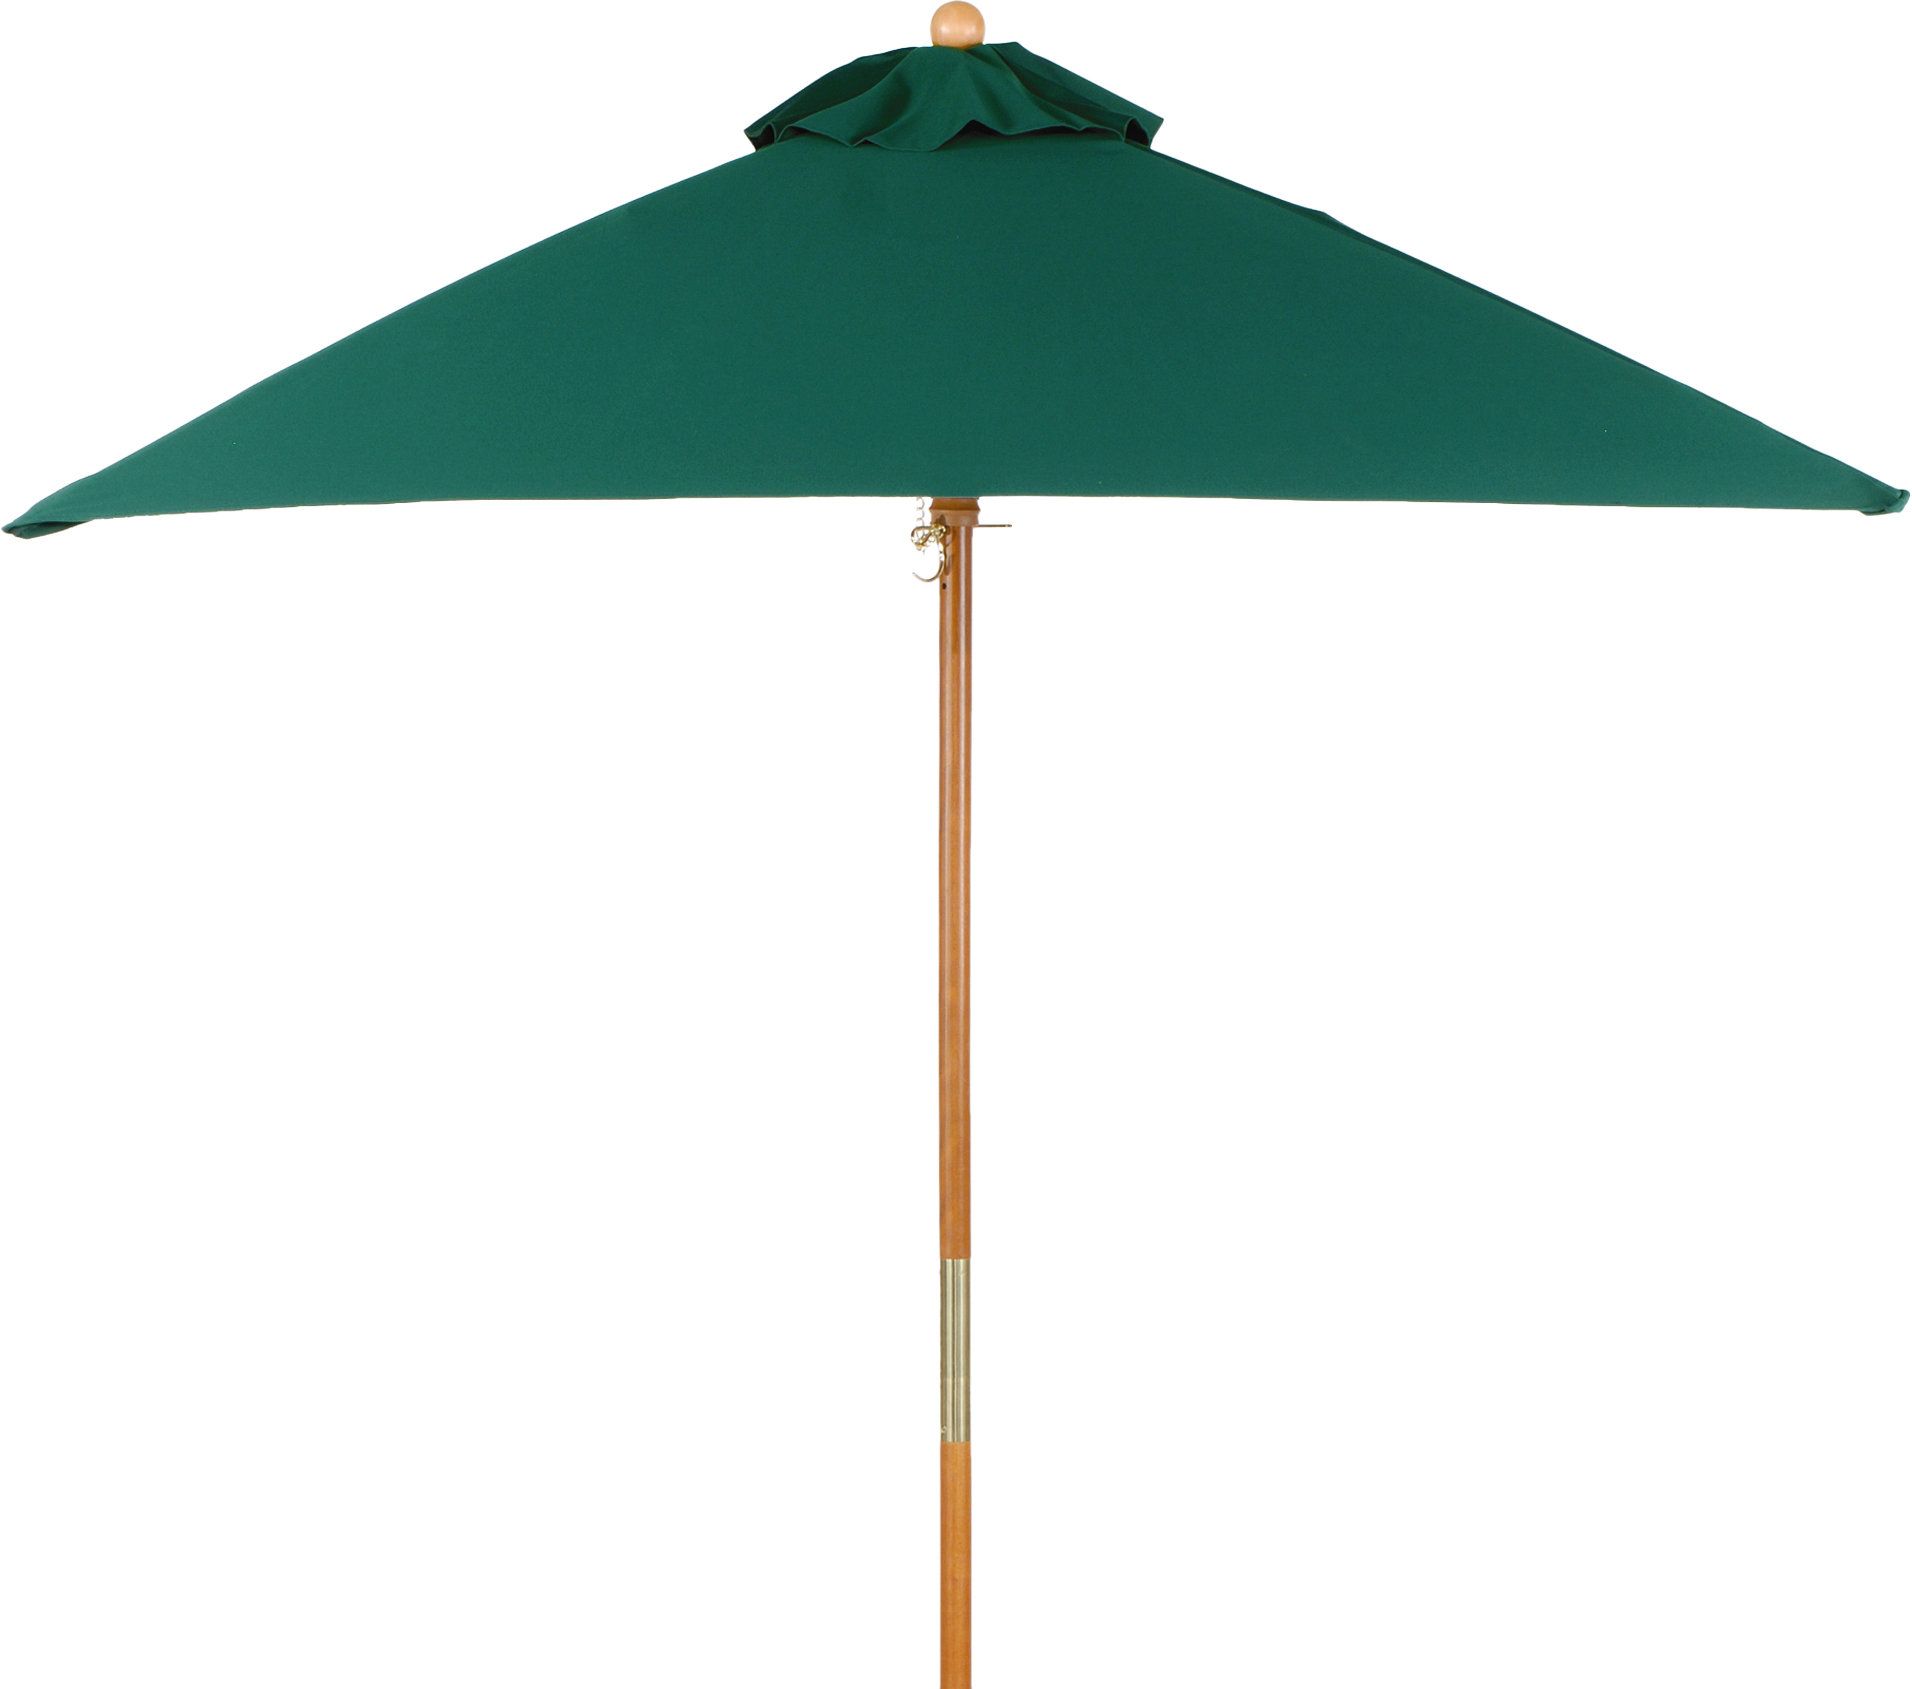 2019 6' Oxford Square Market Umbrella Intended For Crediton Market Umbrellas (View 19 of 20)